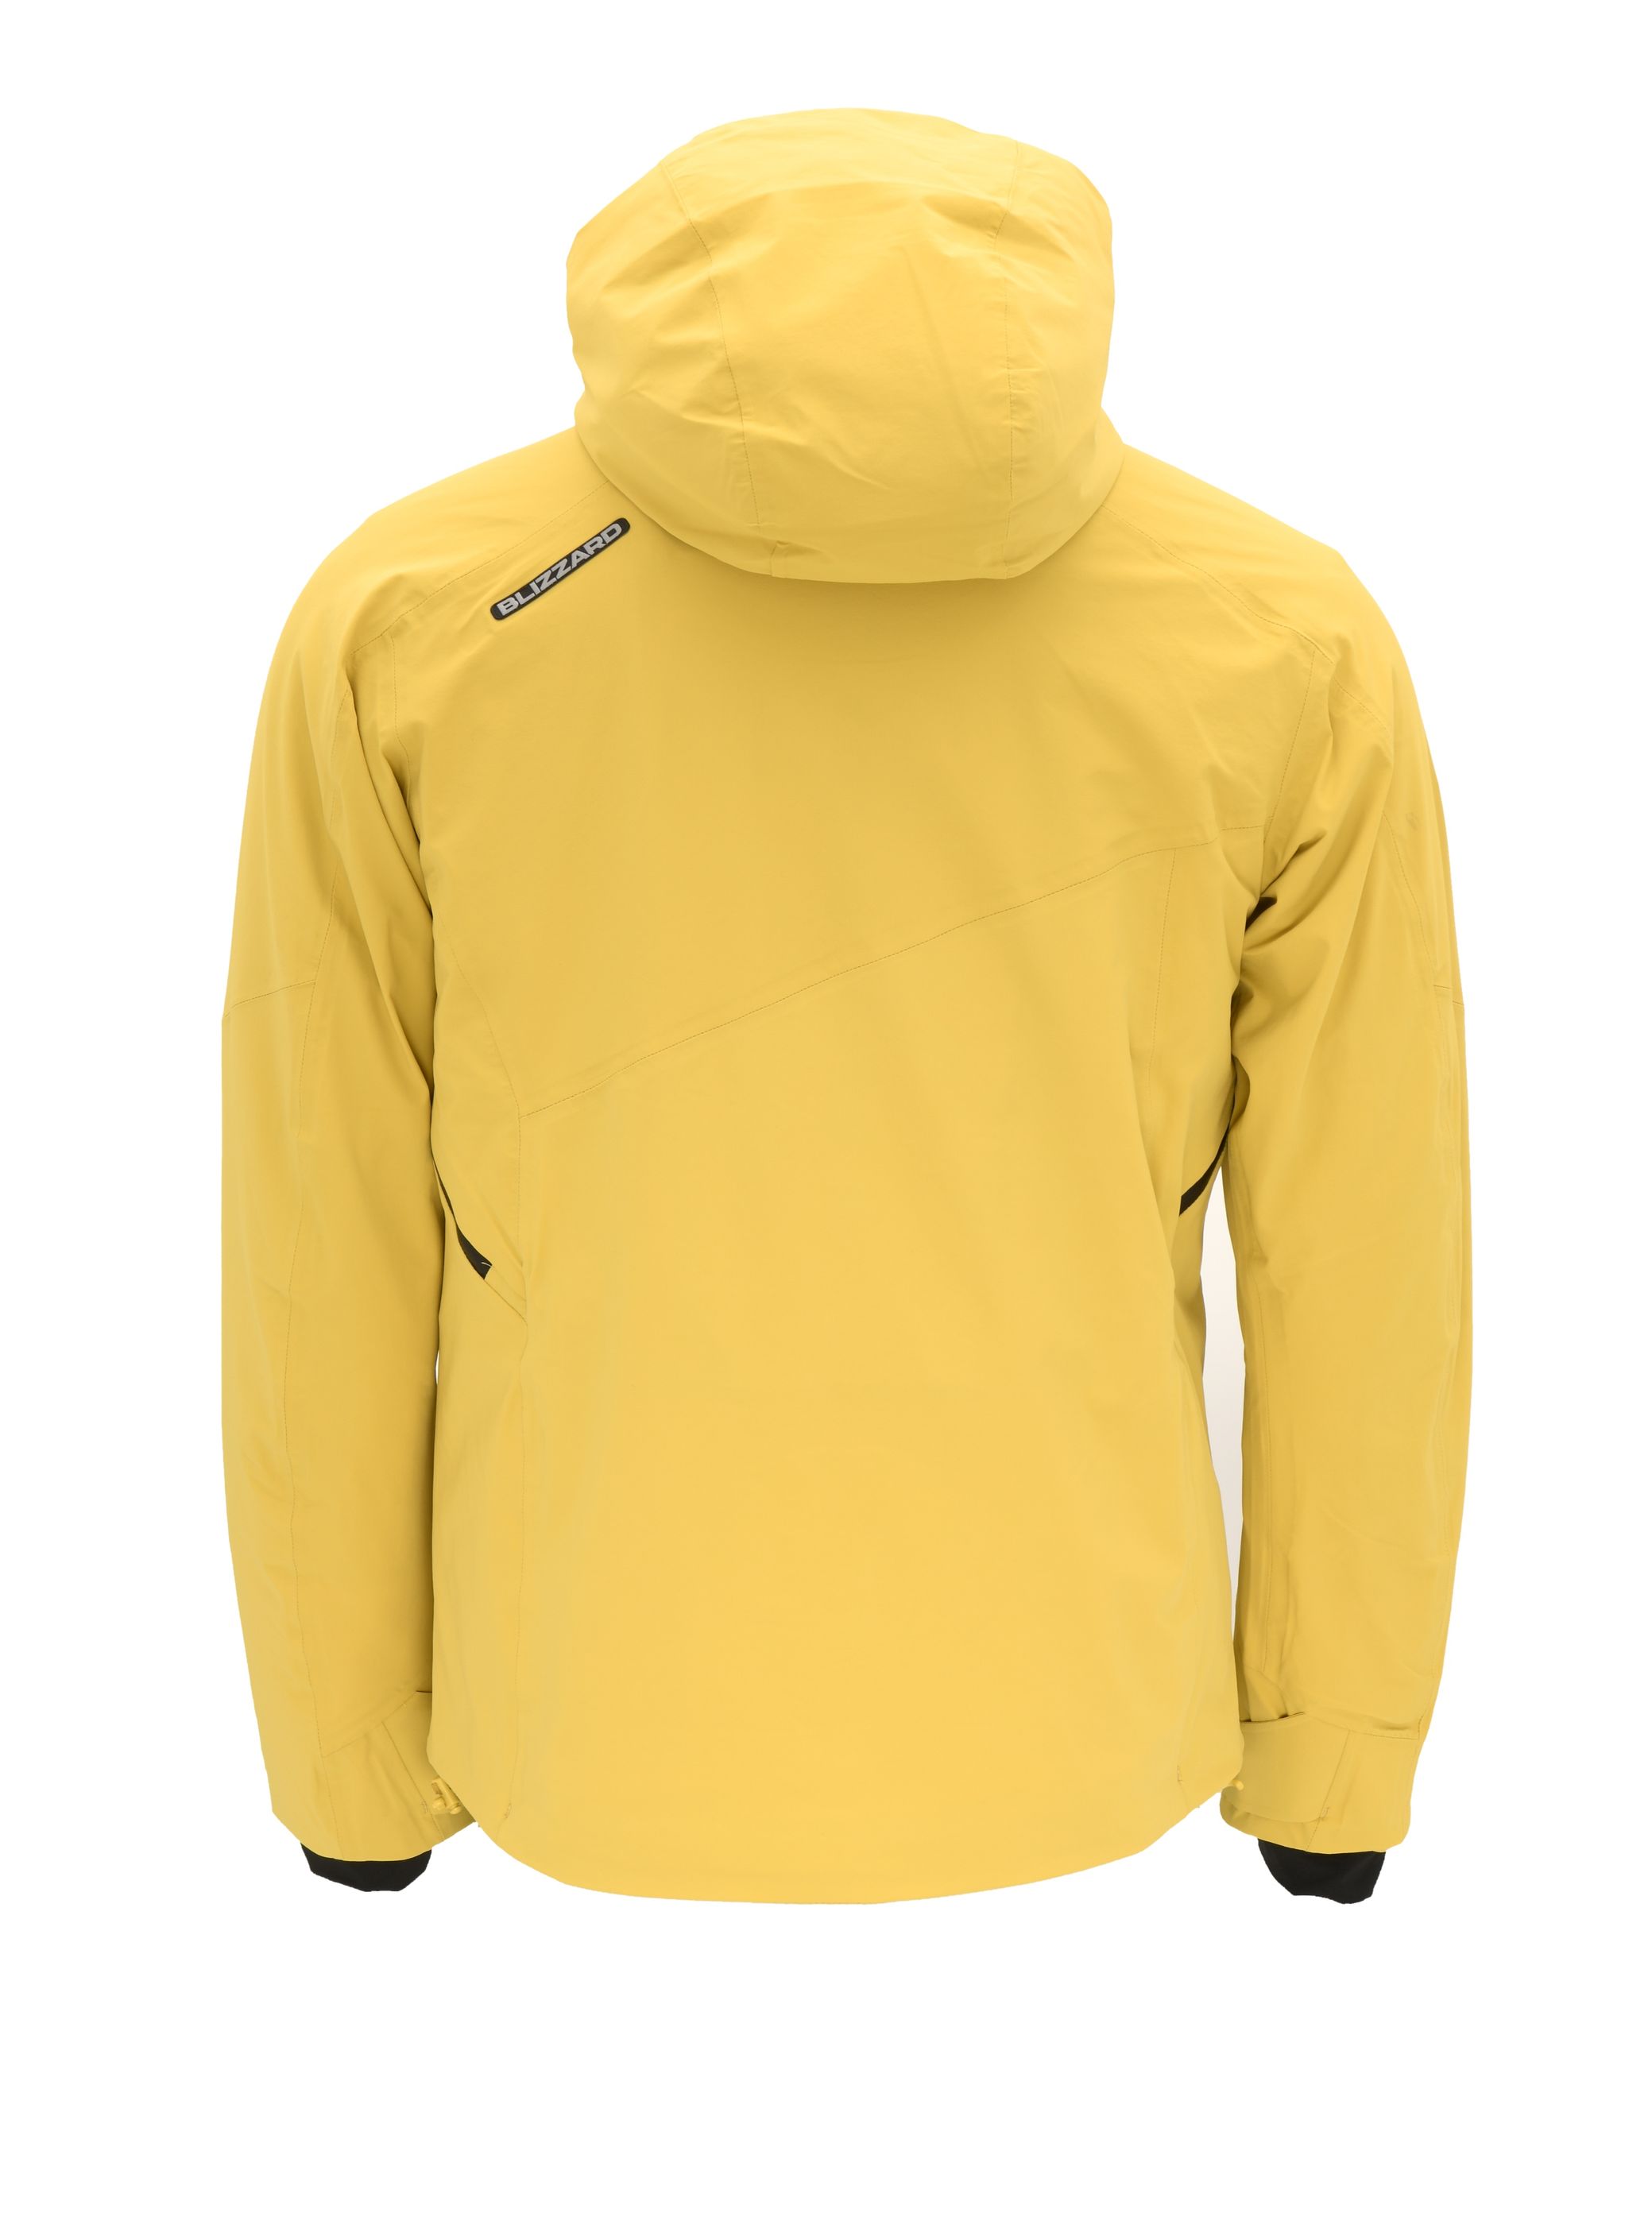 Ski Jacket Silvretta, mustard yellow